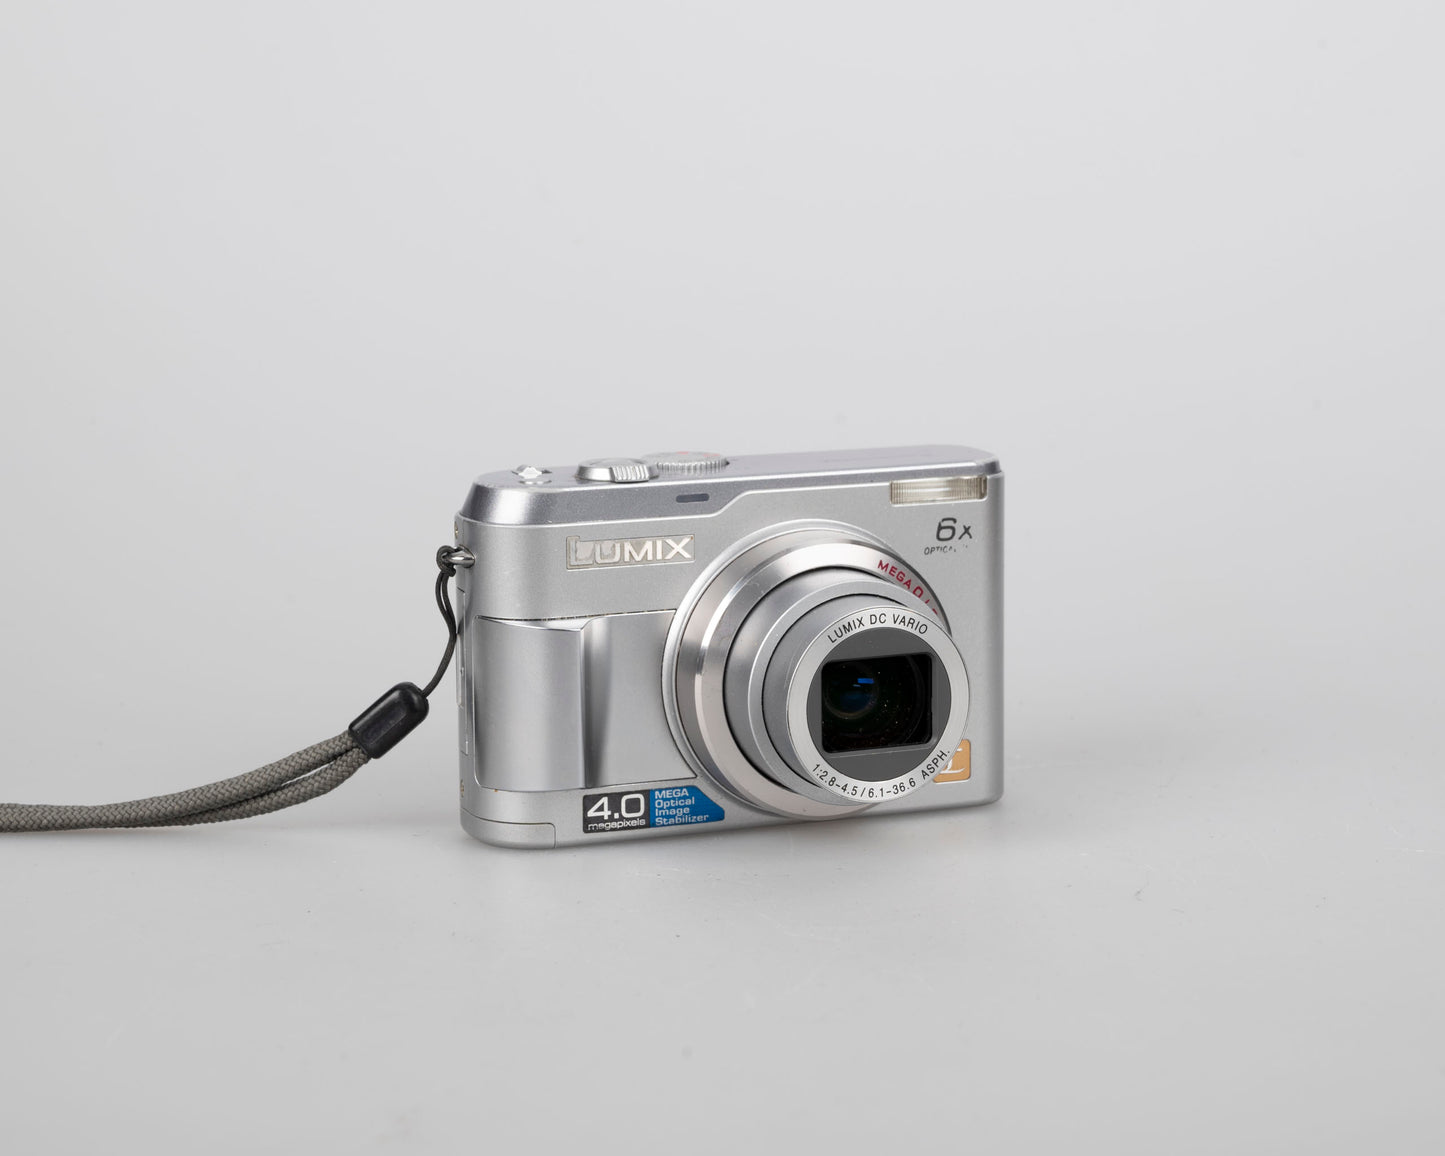 Panasonic Lumix DMC-LZ1 4 MP CCD sensor digicam (uses AA batteries + SD card memory)